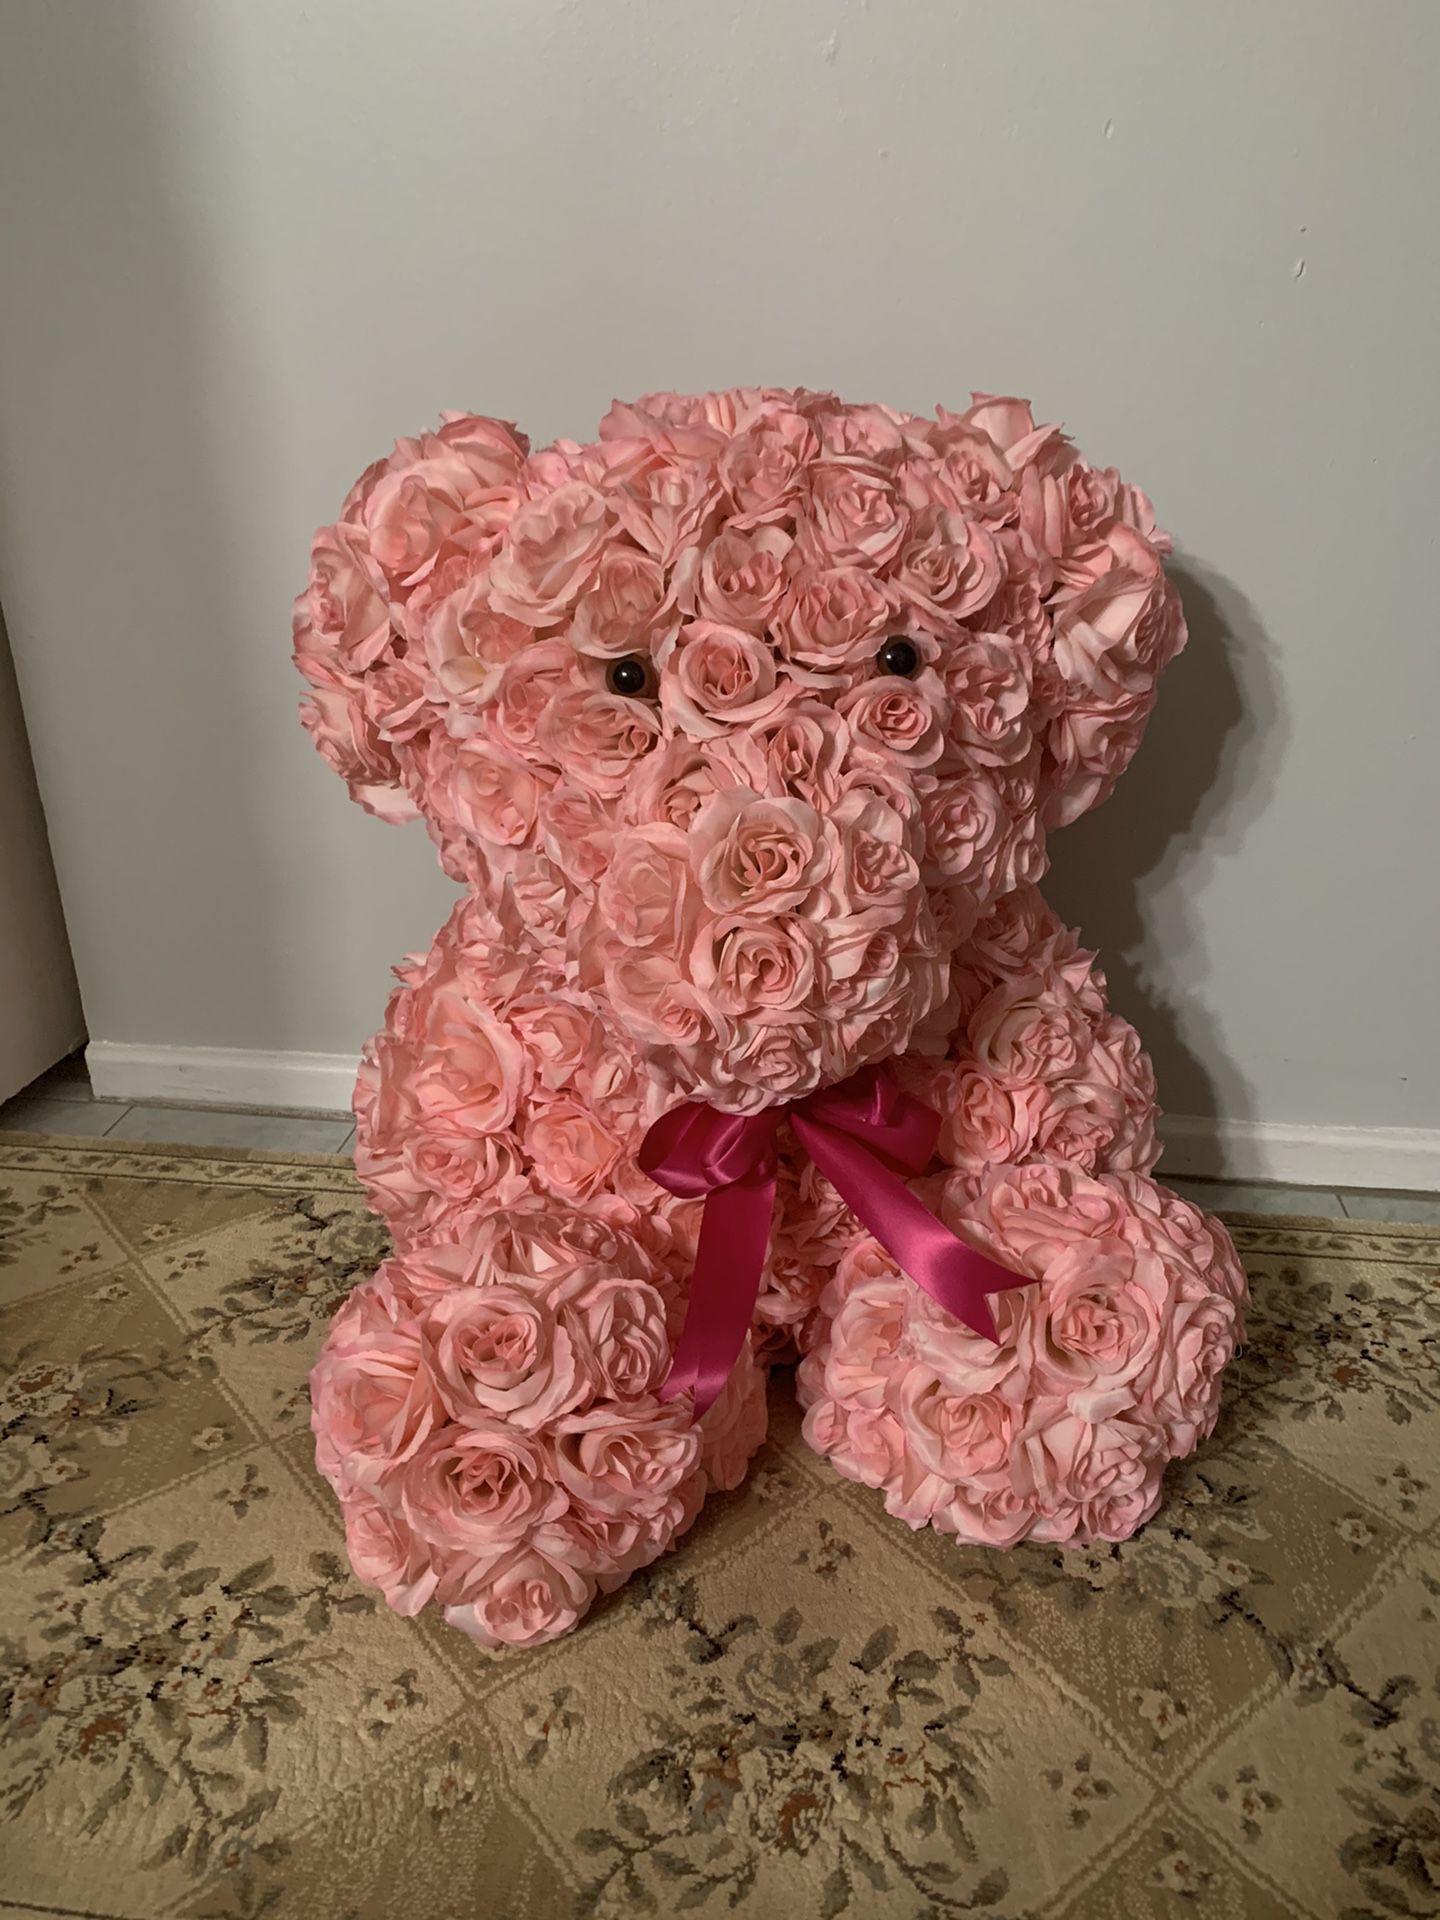 Teddy bear made of flowers